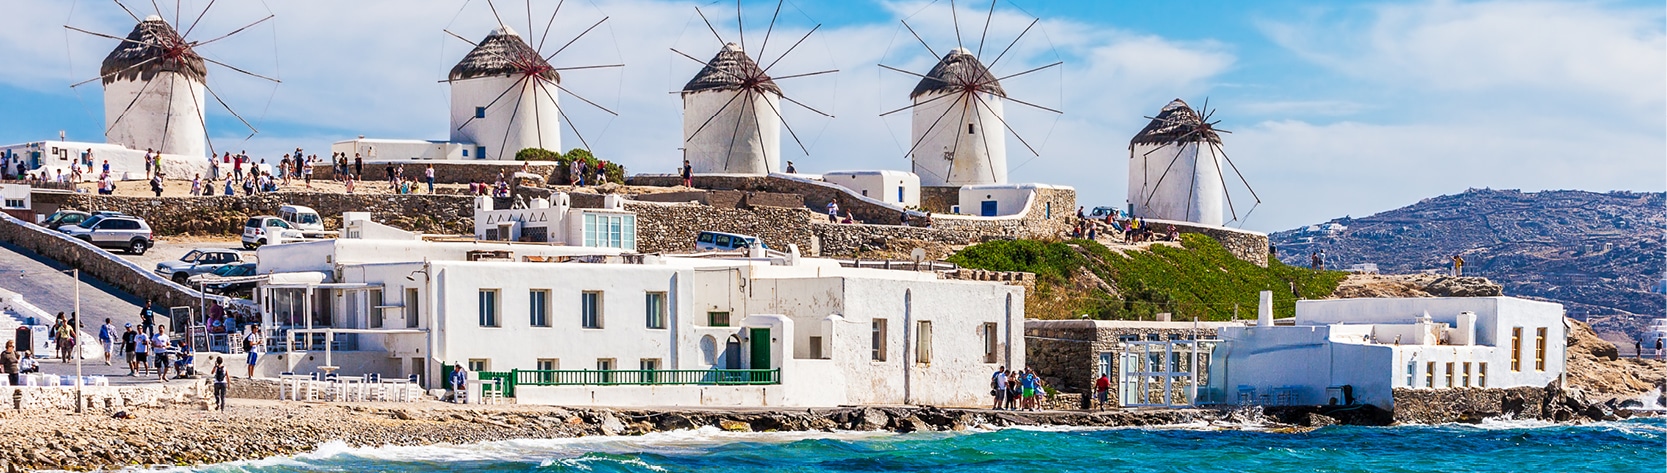 Summer In Greece: Next Stop, Mykonos!